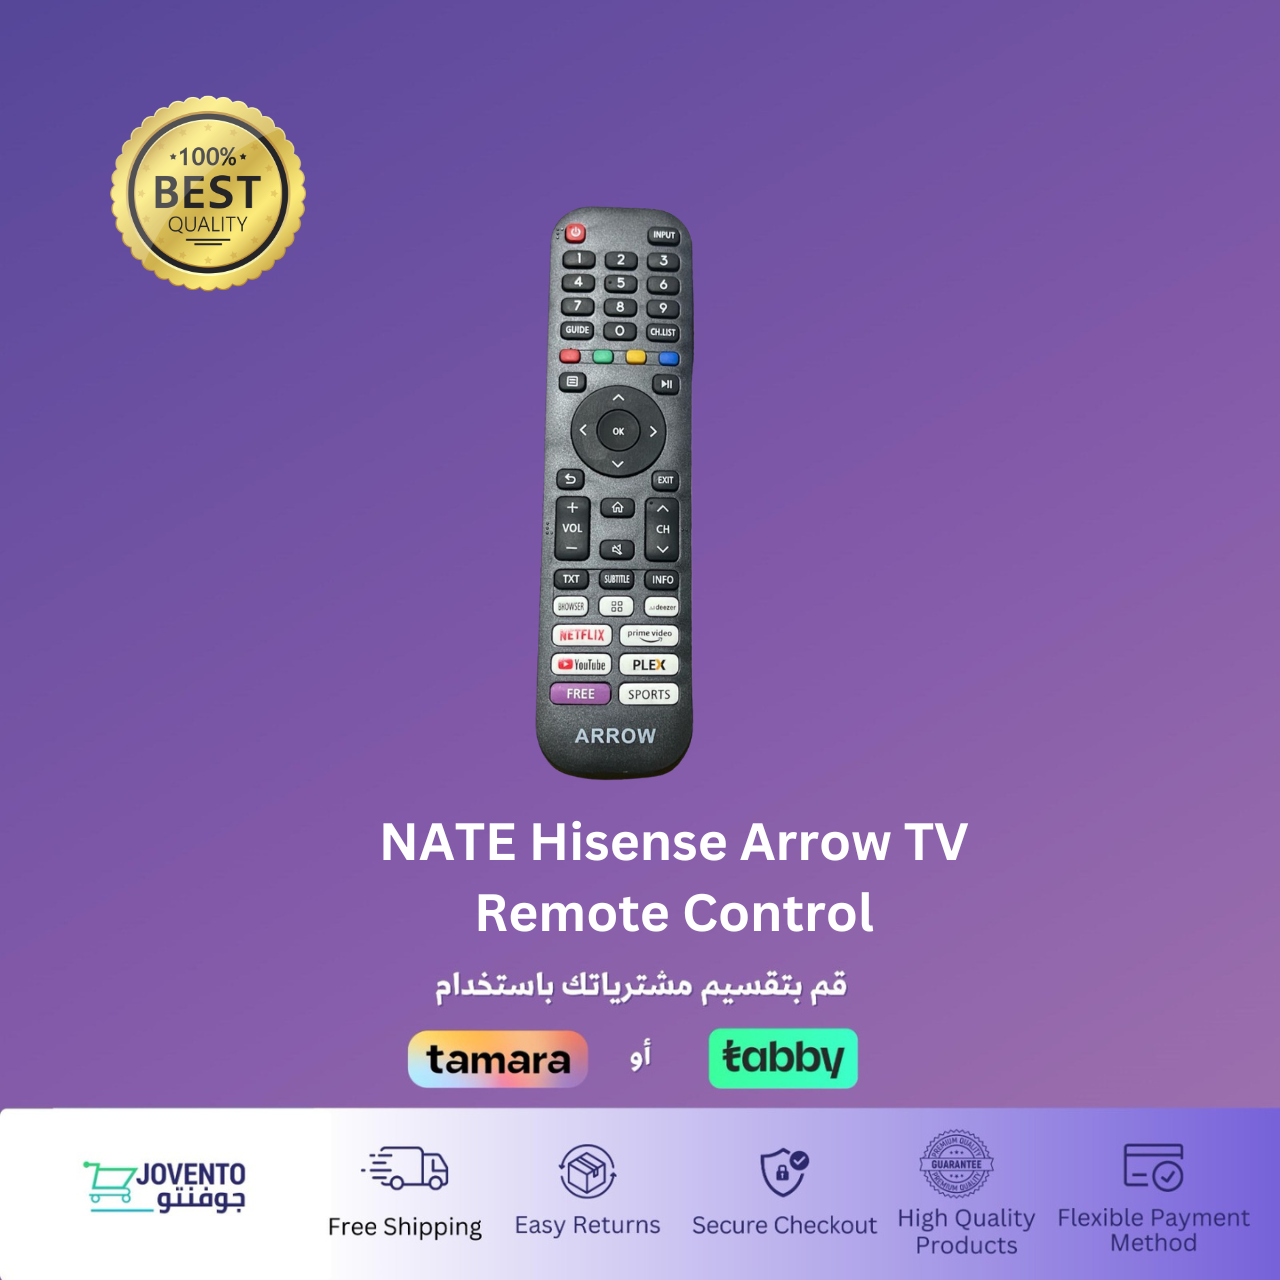 NATE Hisense Arrow TV Remote Control